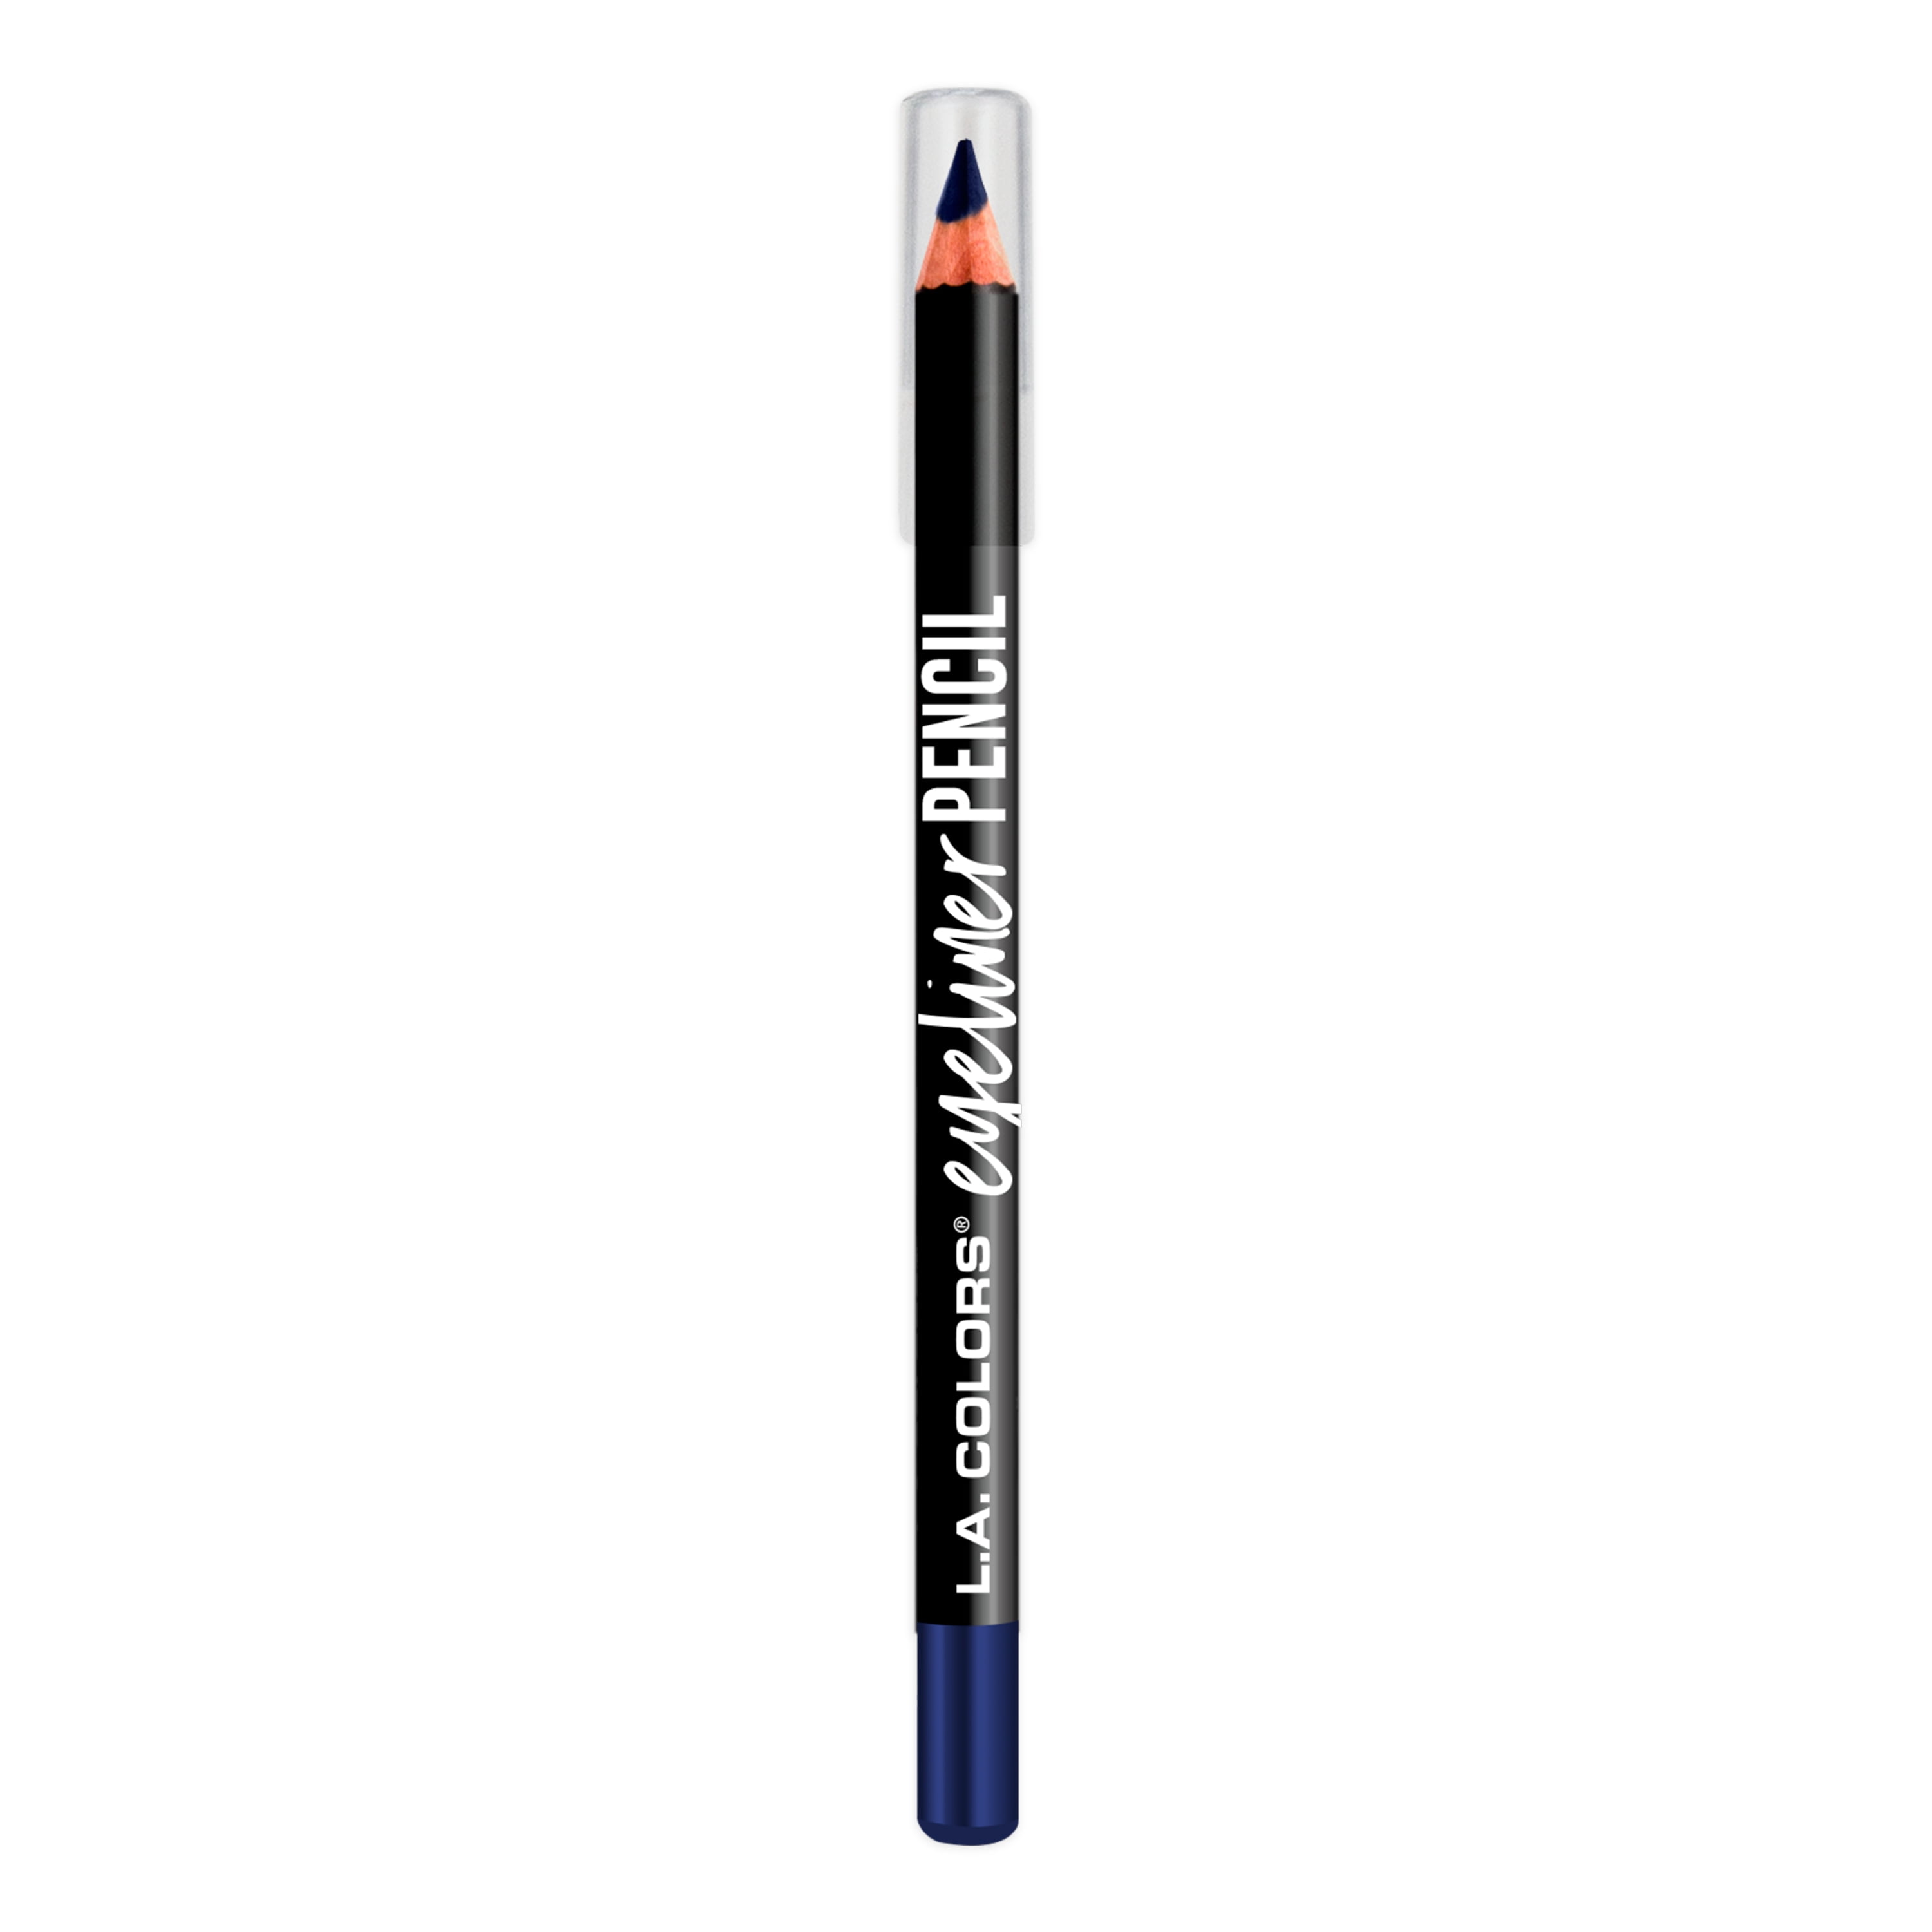 L.A. COLORS Eyeliner Pencil, Navy, 0.035 fl oz